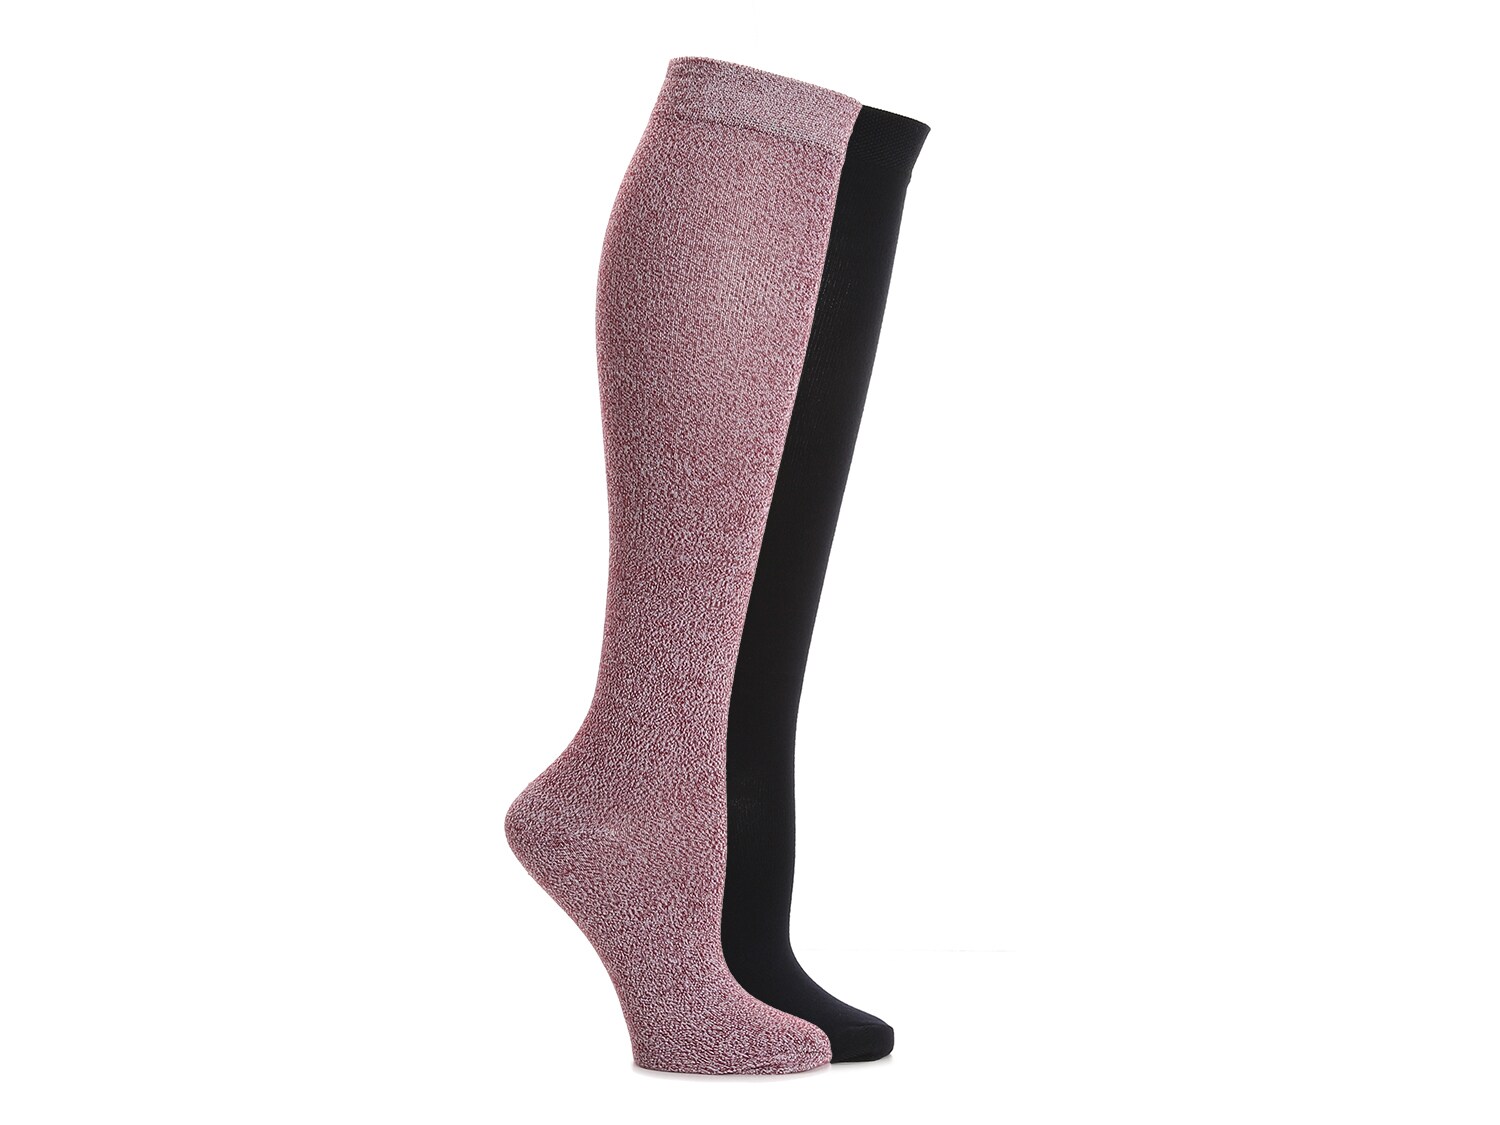 HUE Hosiery Marled Women's Knee Socks - 2 Pack - Free Shipping | DSW